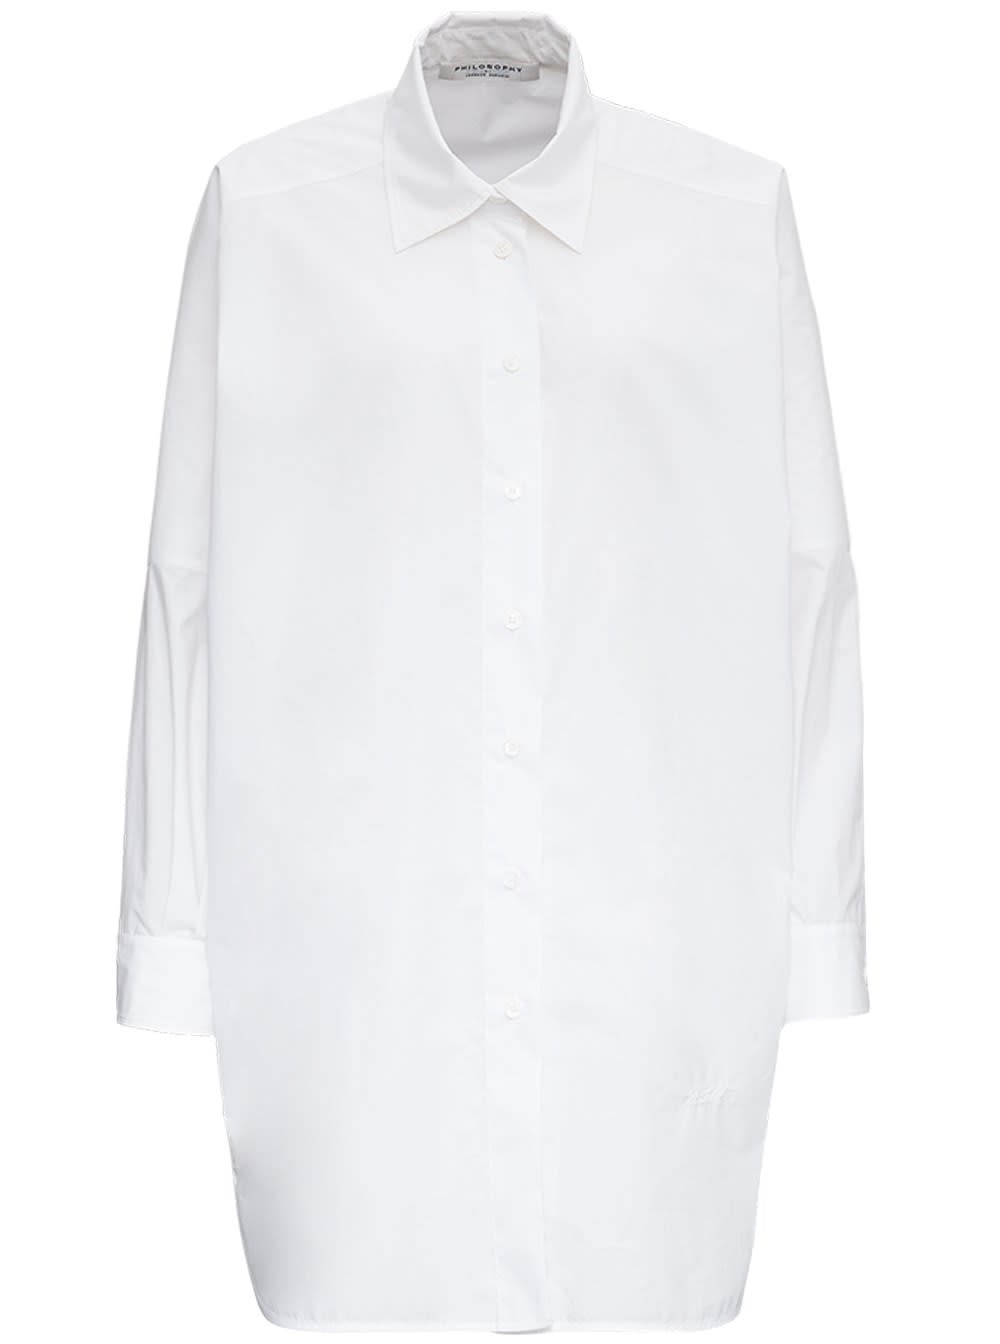 Philosophy di Lorenzo Serafini Oversize Cotton Poplin Shirt